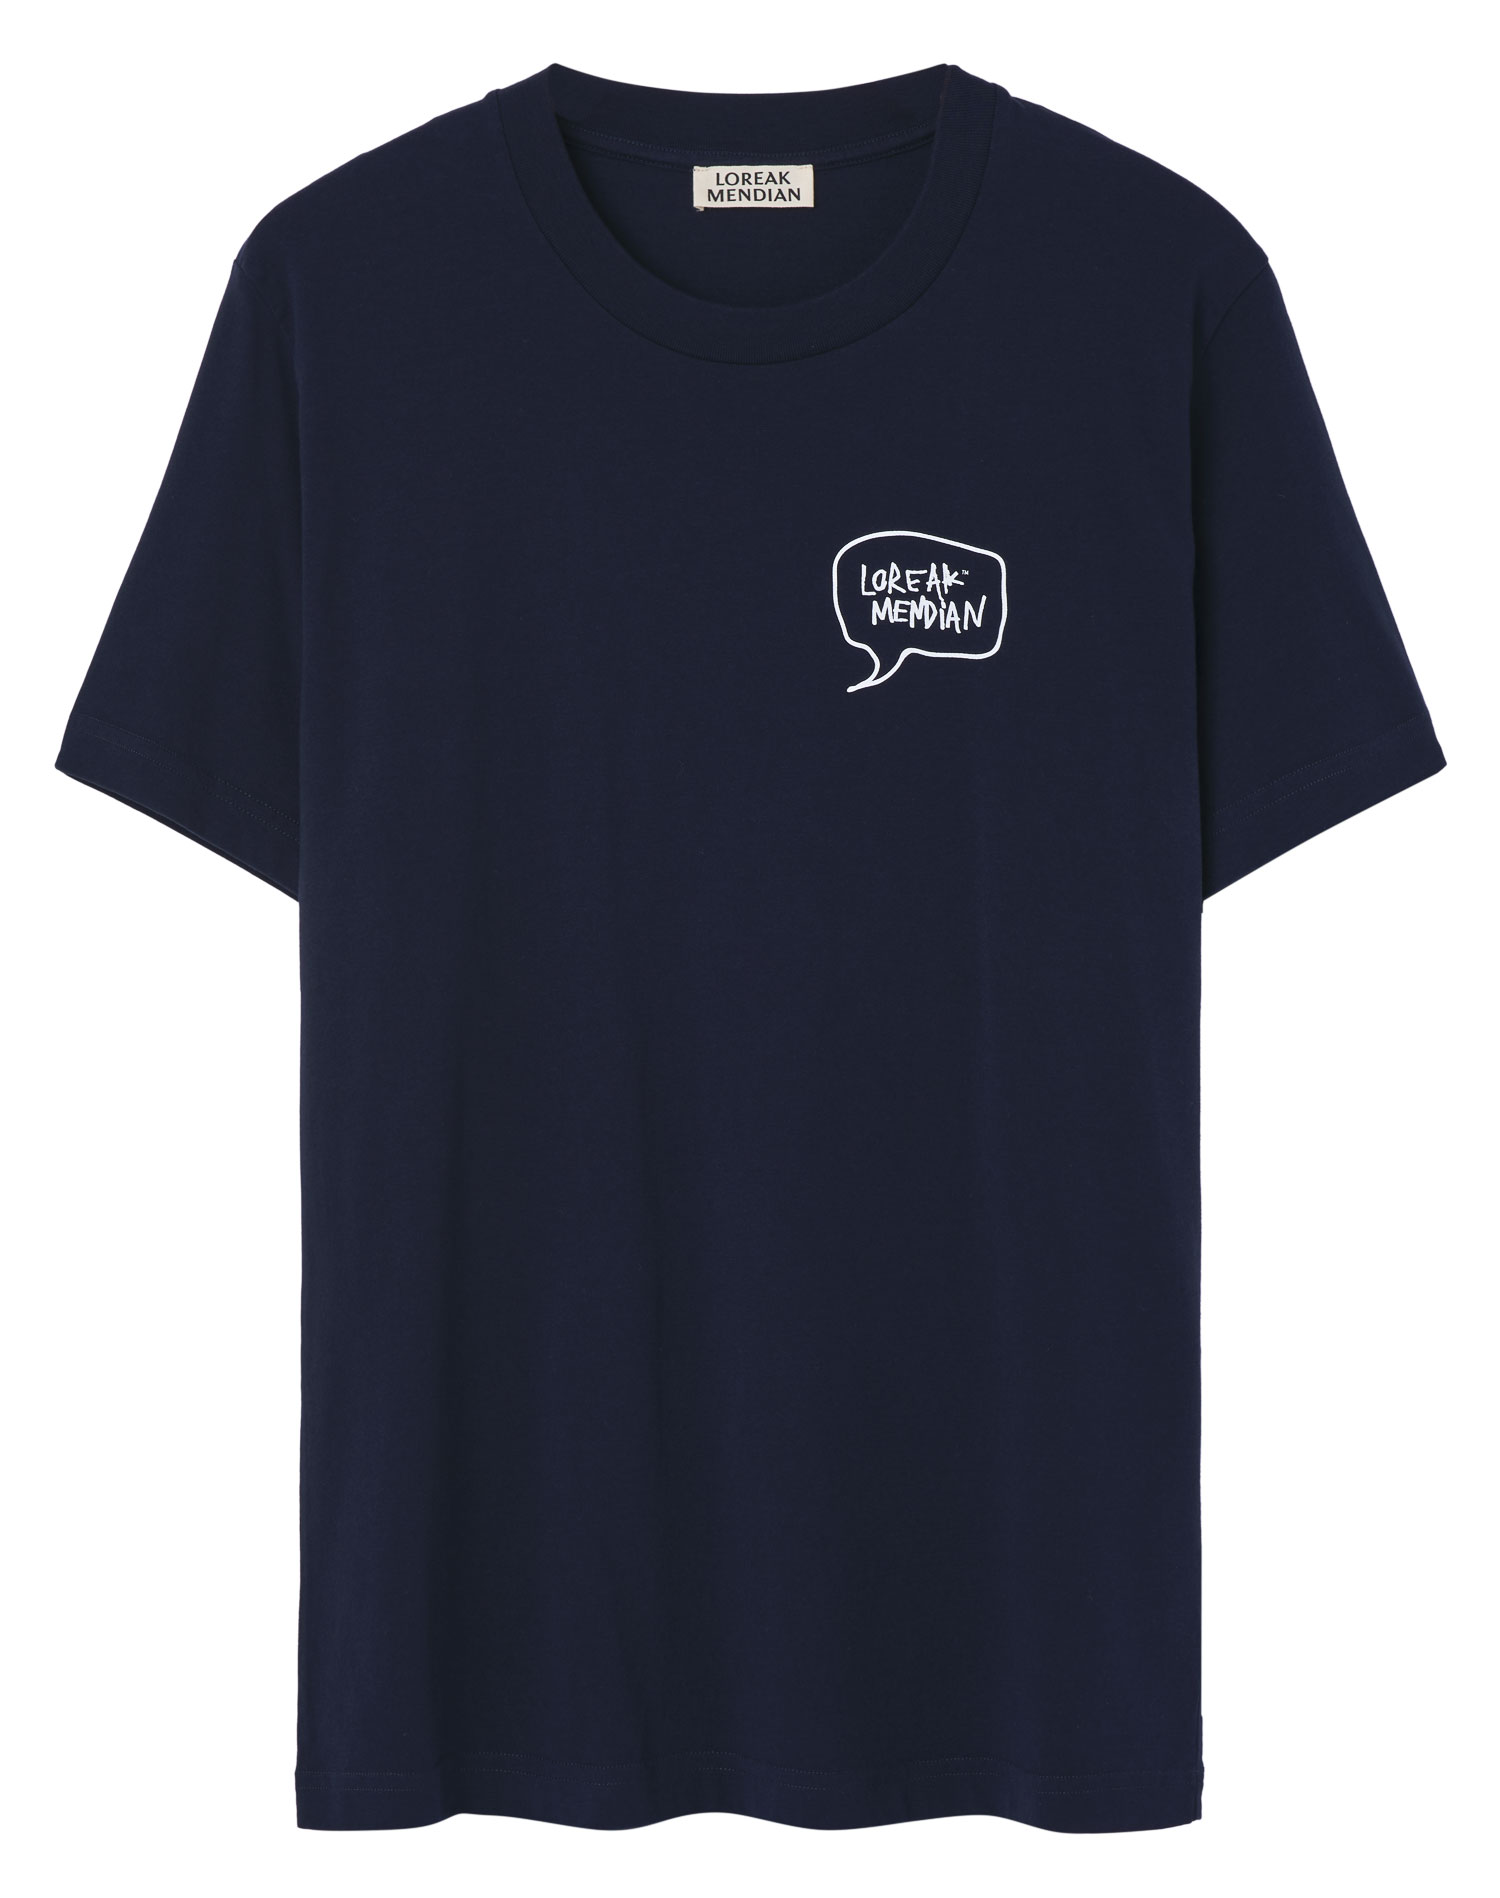 Loreak Navy Pio T-Shirt